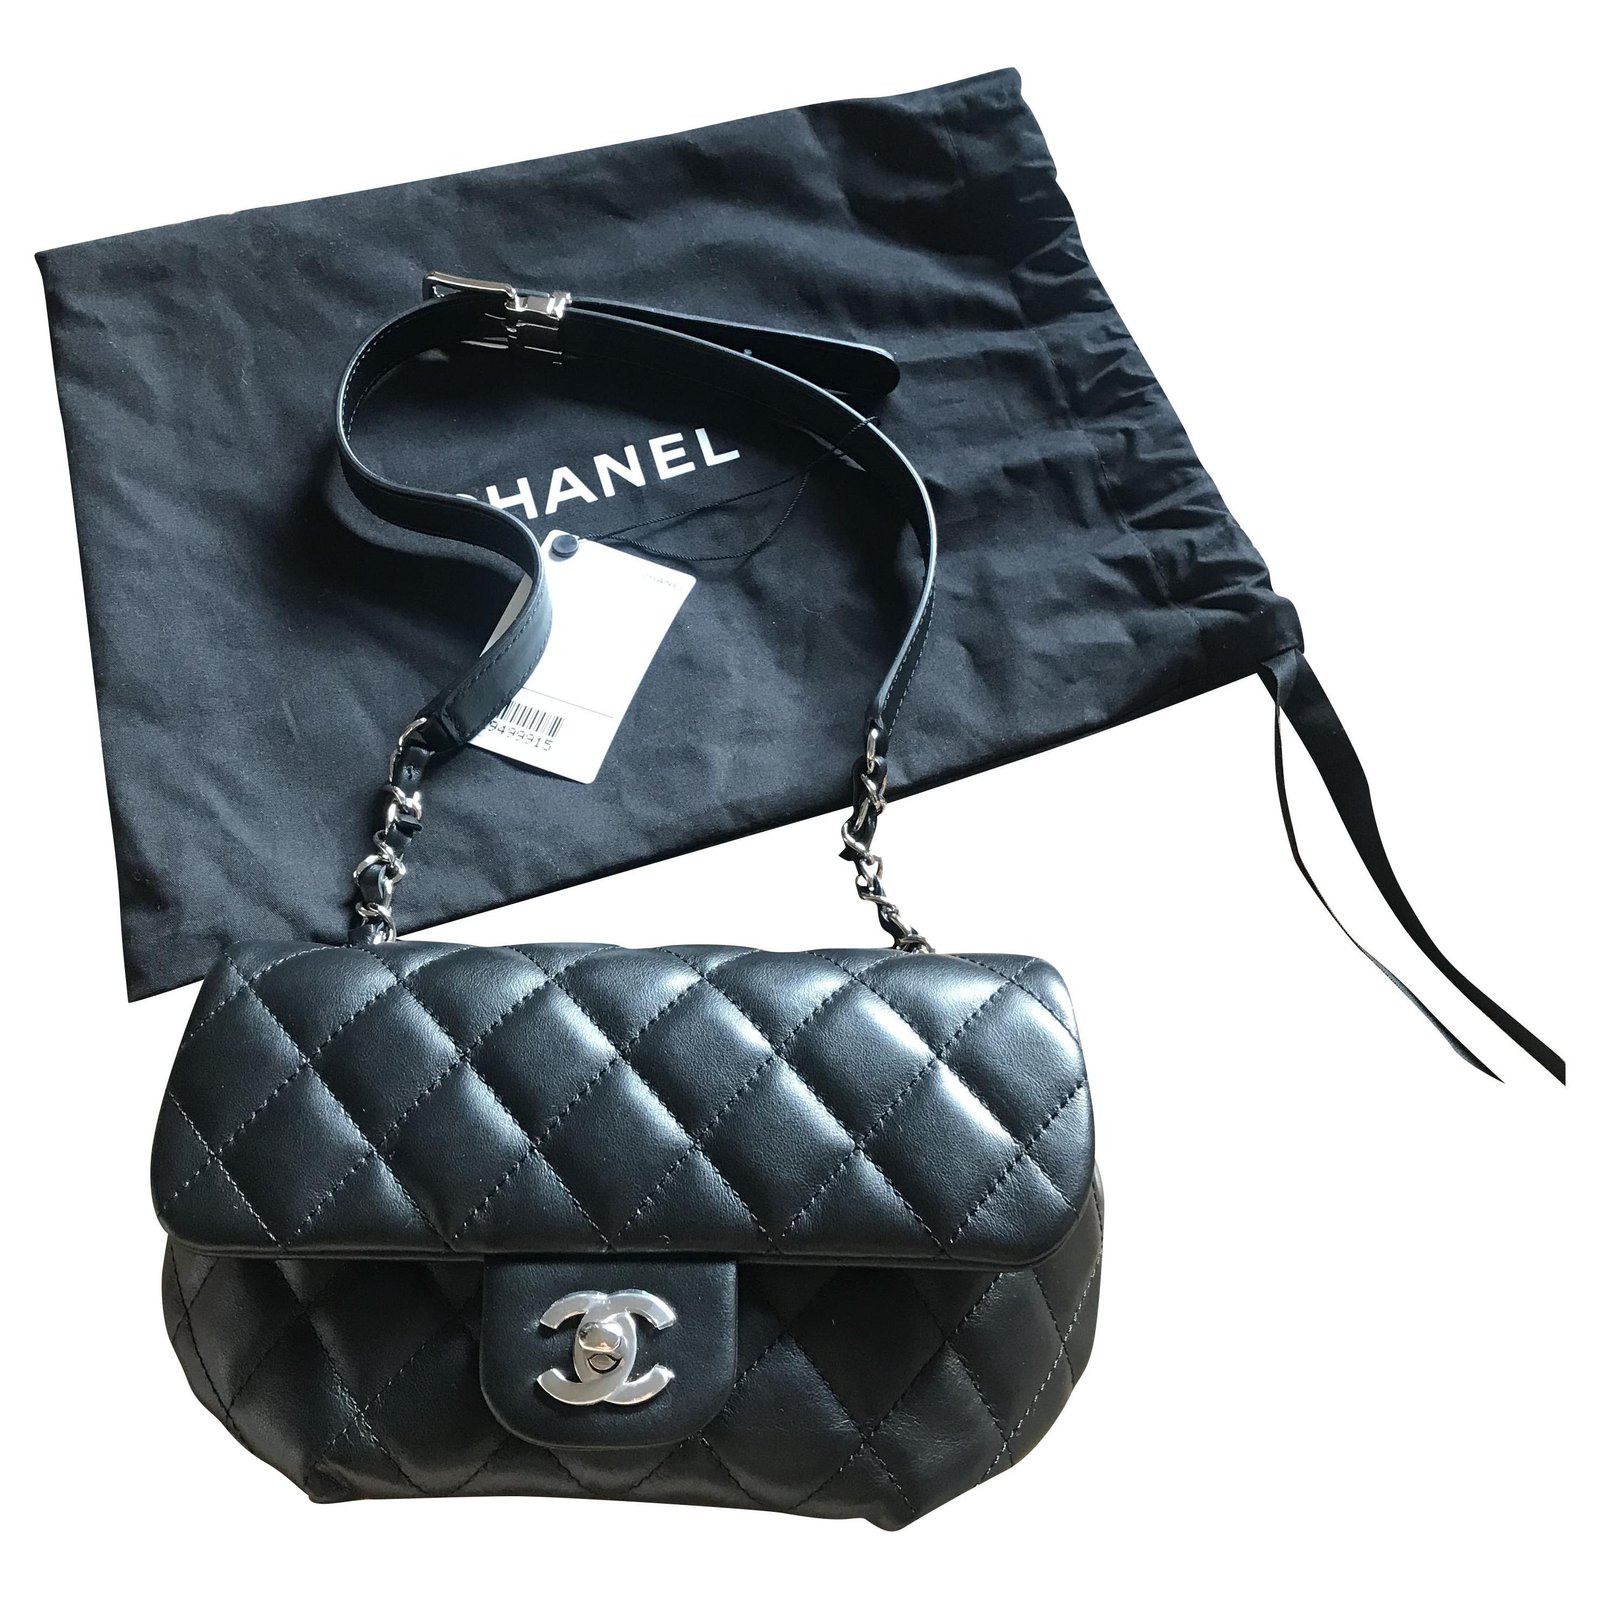 Chanel quilted belt bag